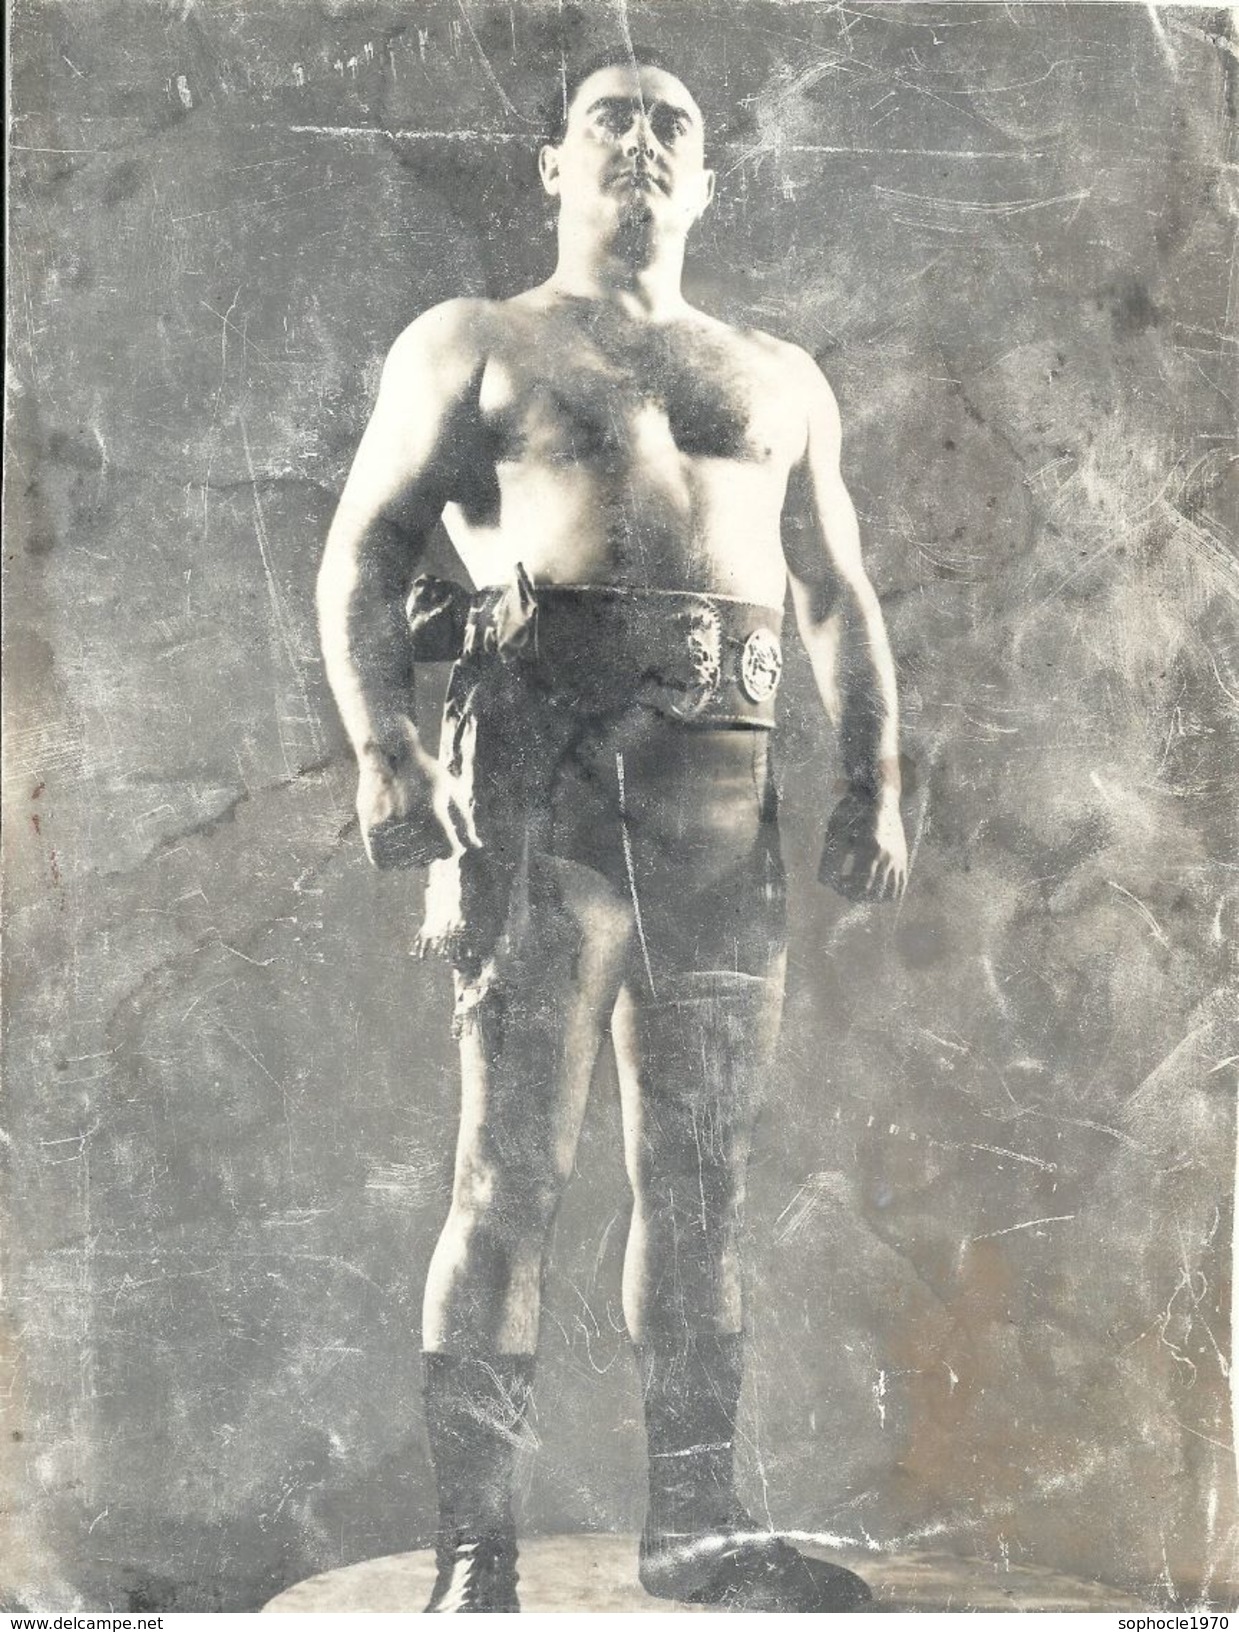 Wrestling - LUTTE - CATCH - Photo presse format 18 x 24 cm - Ricardo Zamora  Champion Espagnol catégorie 95 kilos - Photo défraichie